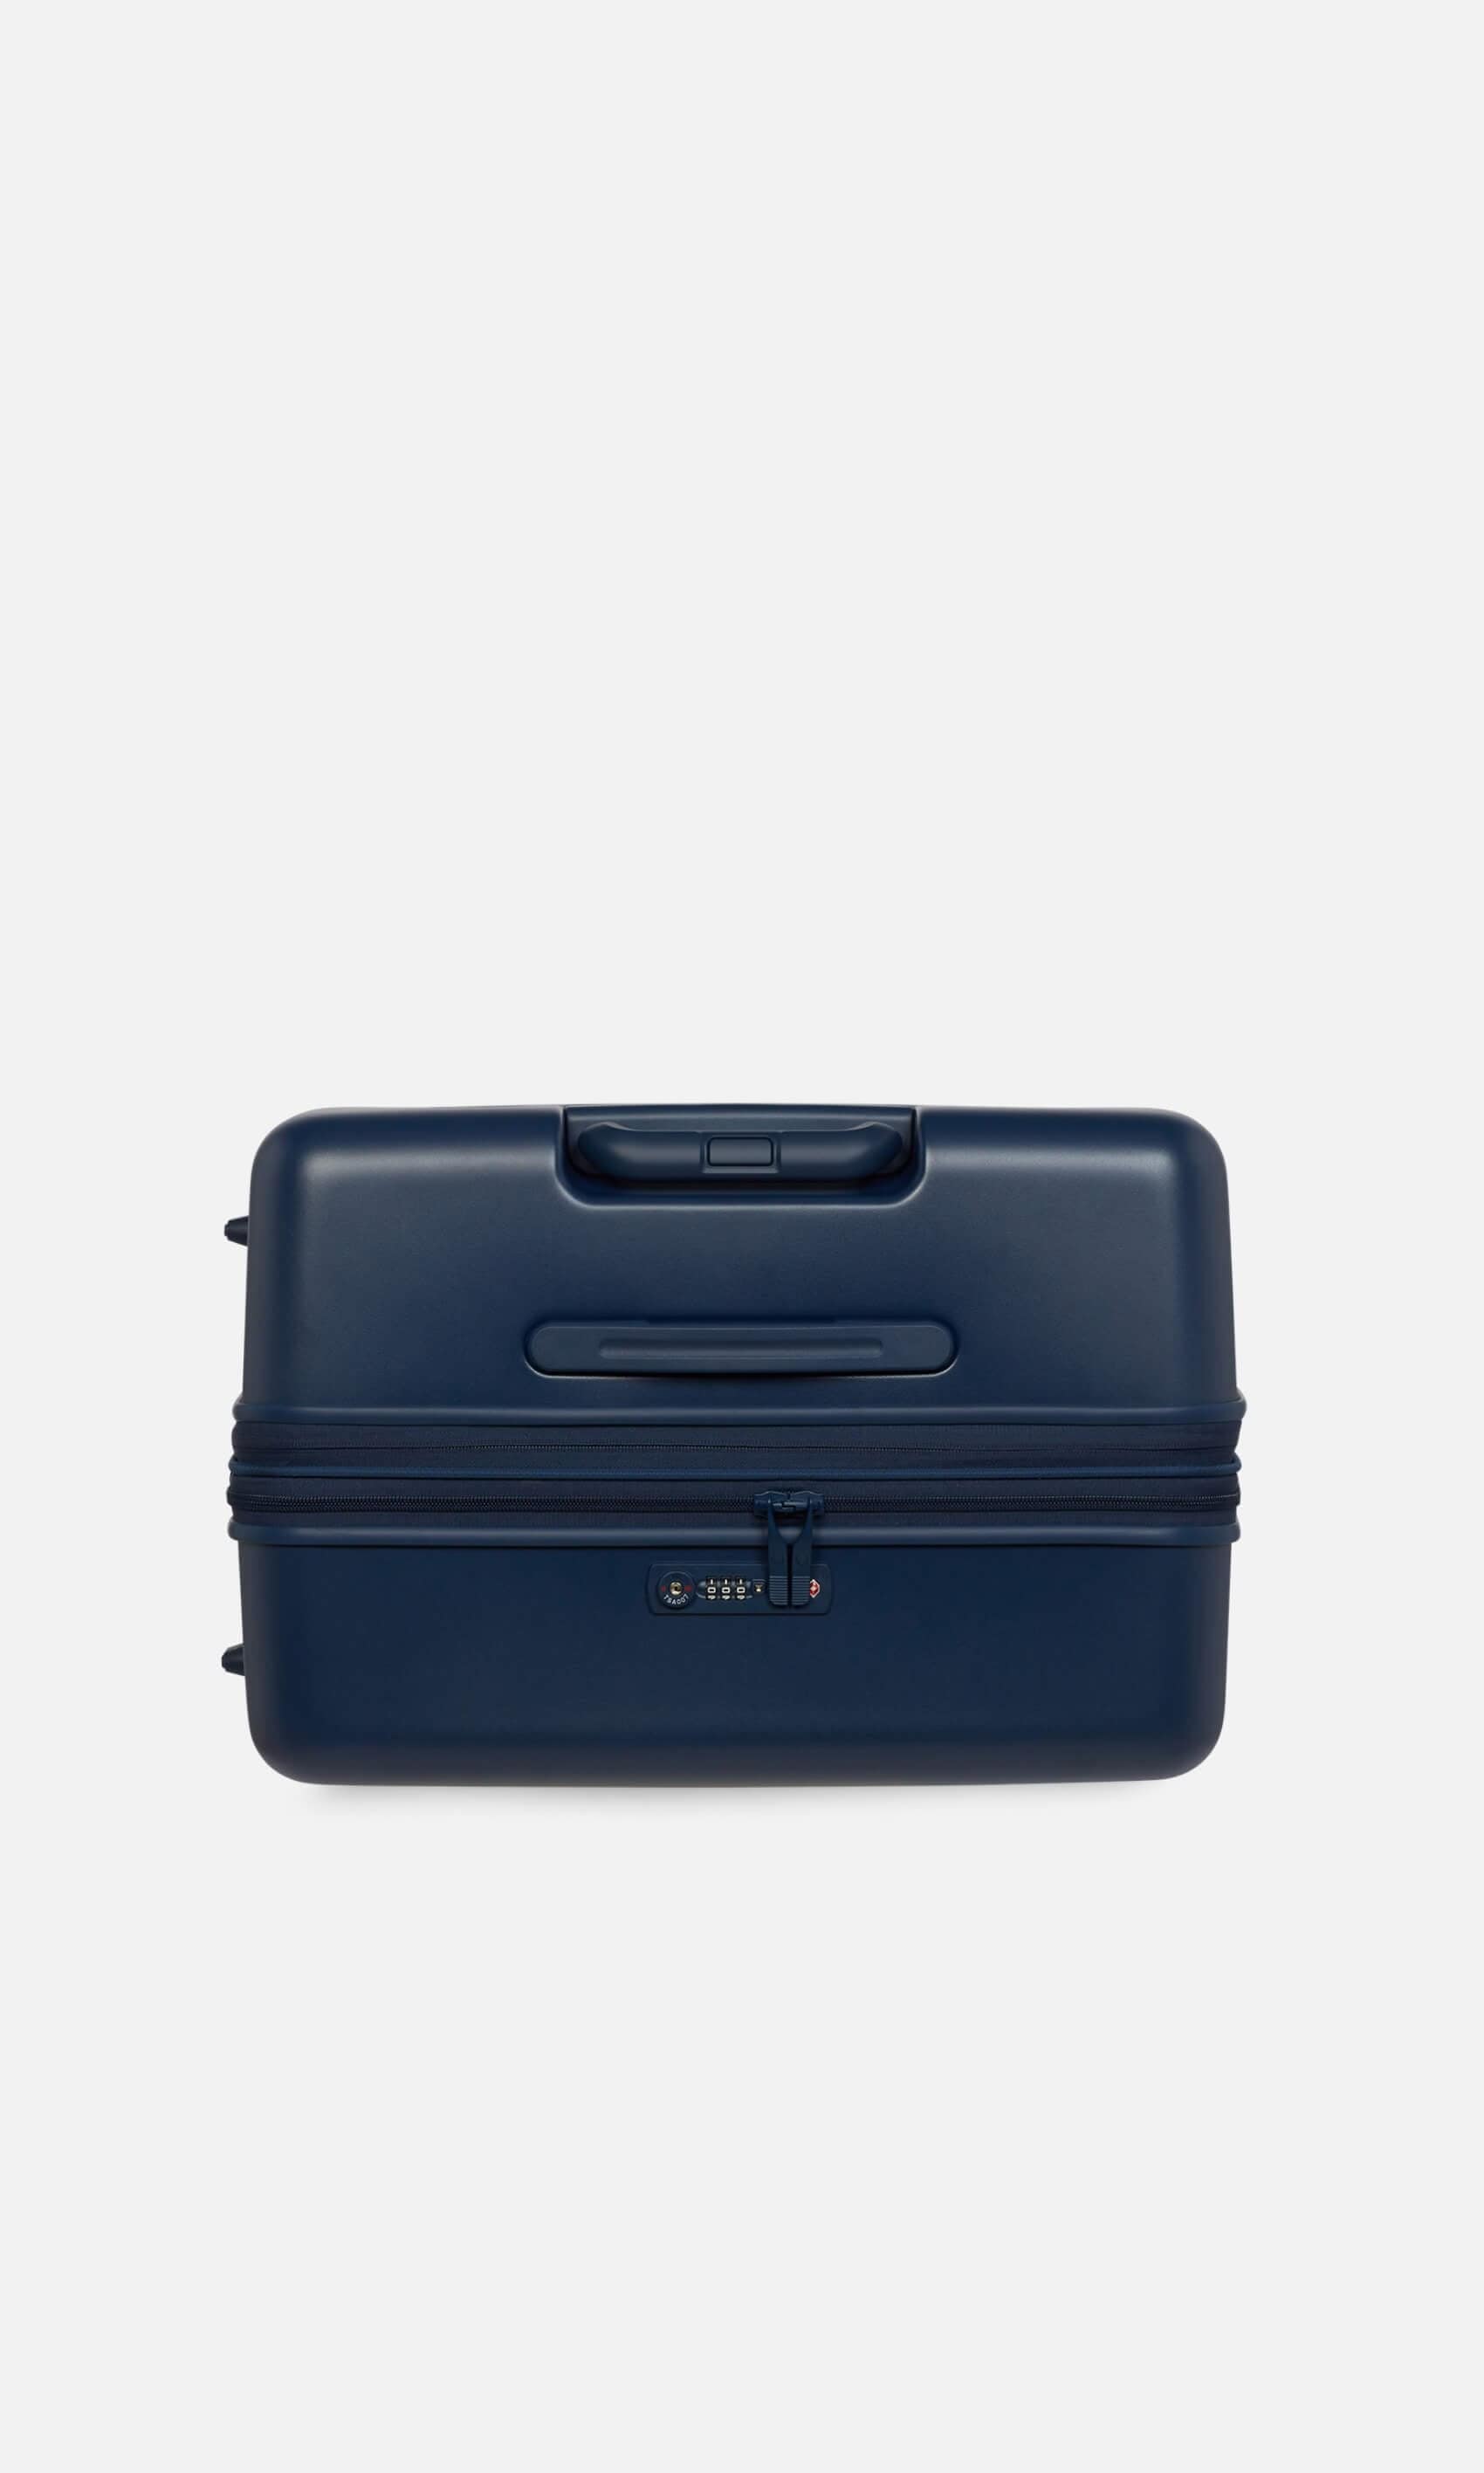 Antler Luggage -  Stamford set in dusk blue - Hard Suitcases Stamford Set of 3 Suitcases Blue | Hard Luggage | Antler 